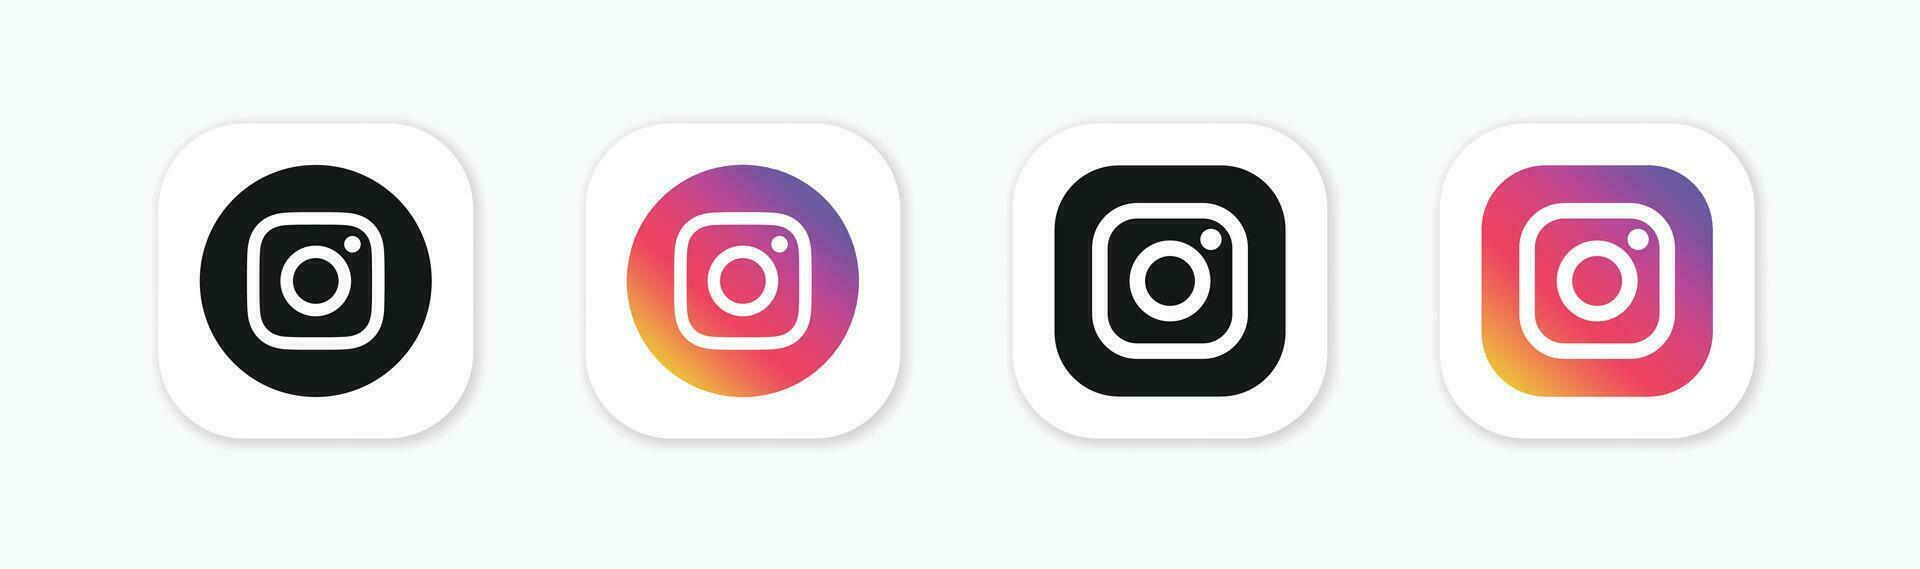 Set of instagram social media logo icons. instagram icon. Simple vector ...